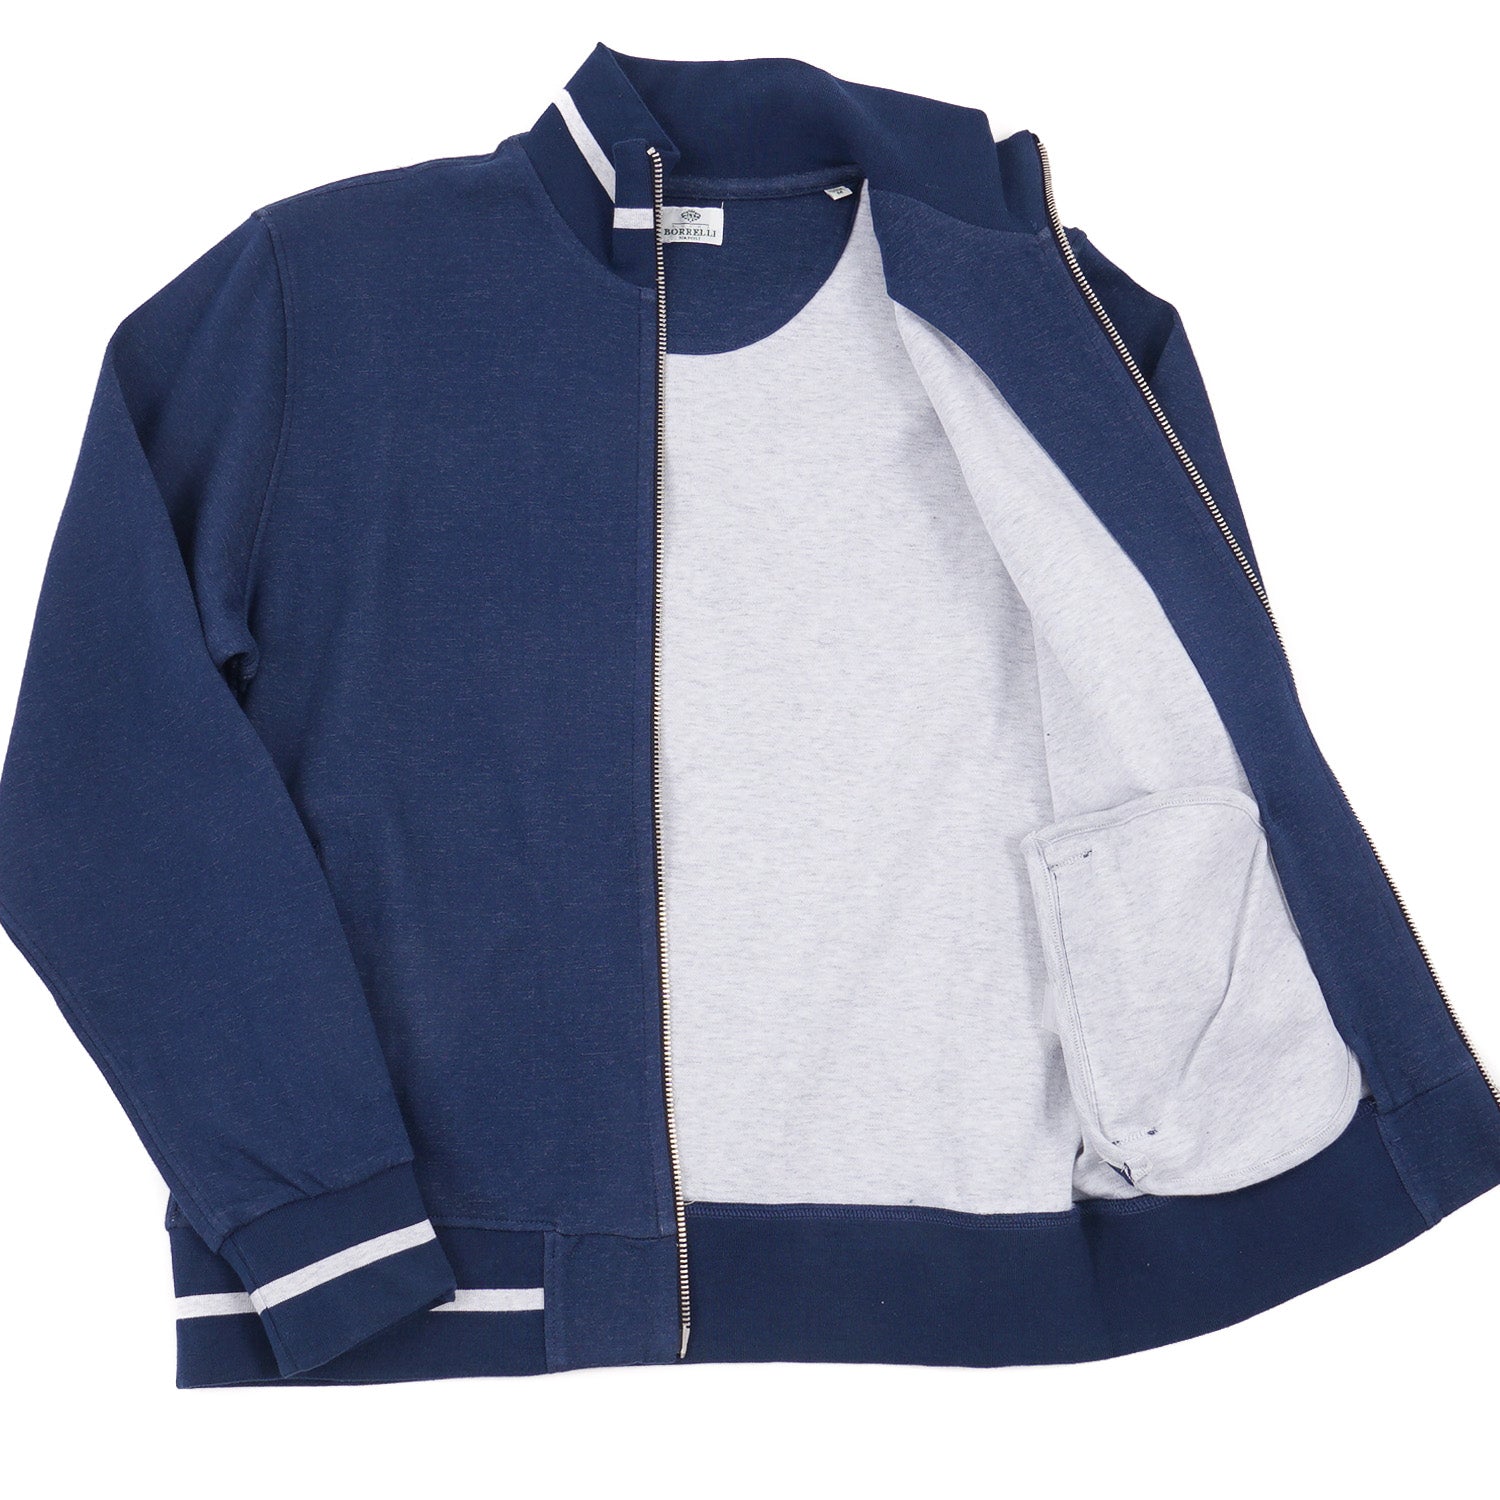 Borrelli Jersey Cotton Athletic Jacket - Top Shelf Apparel